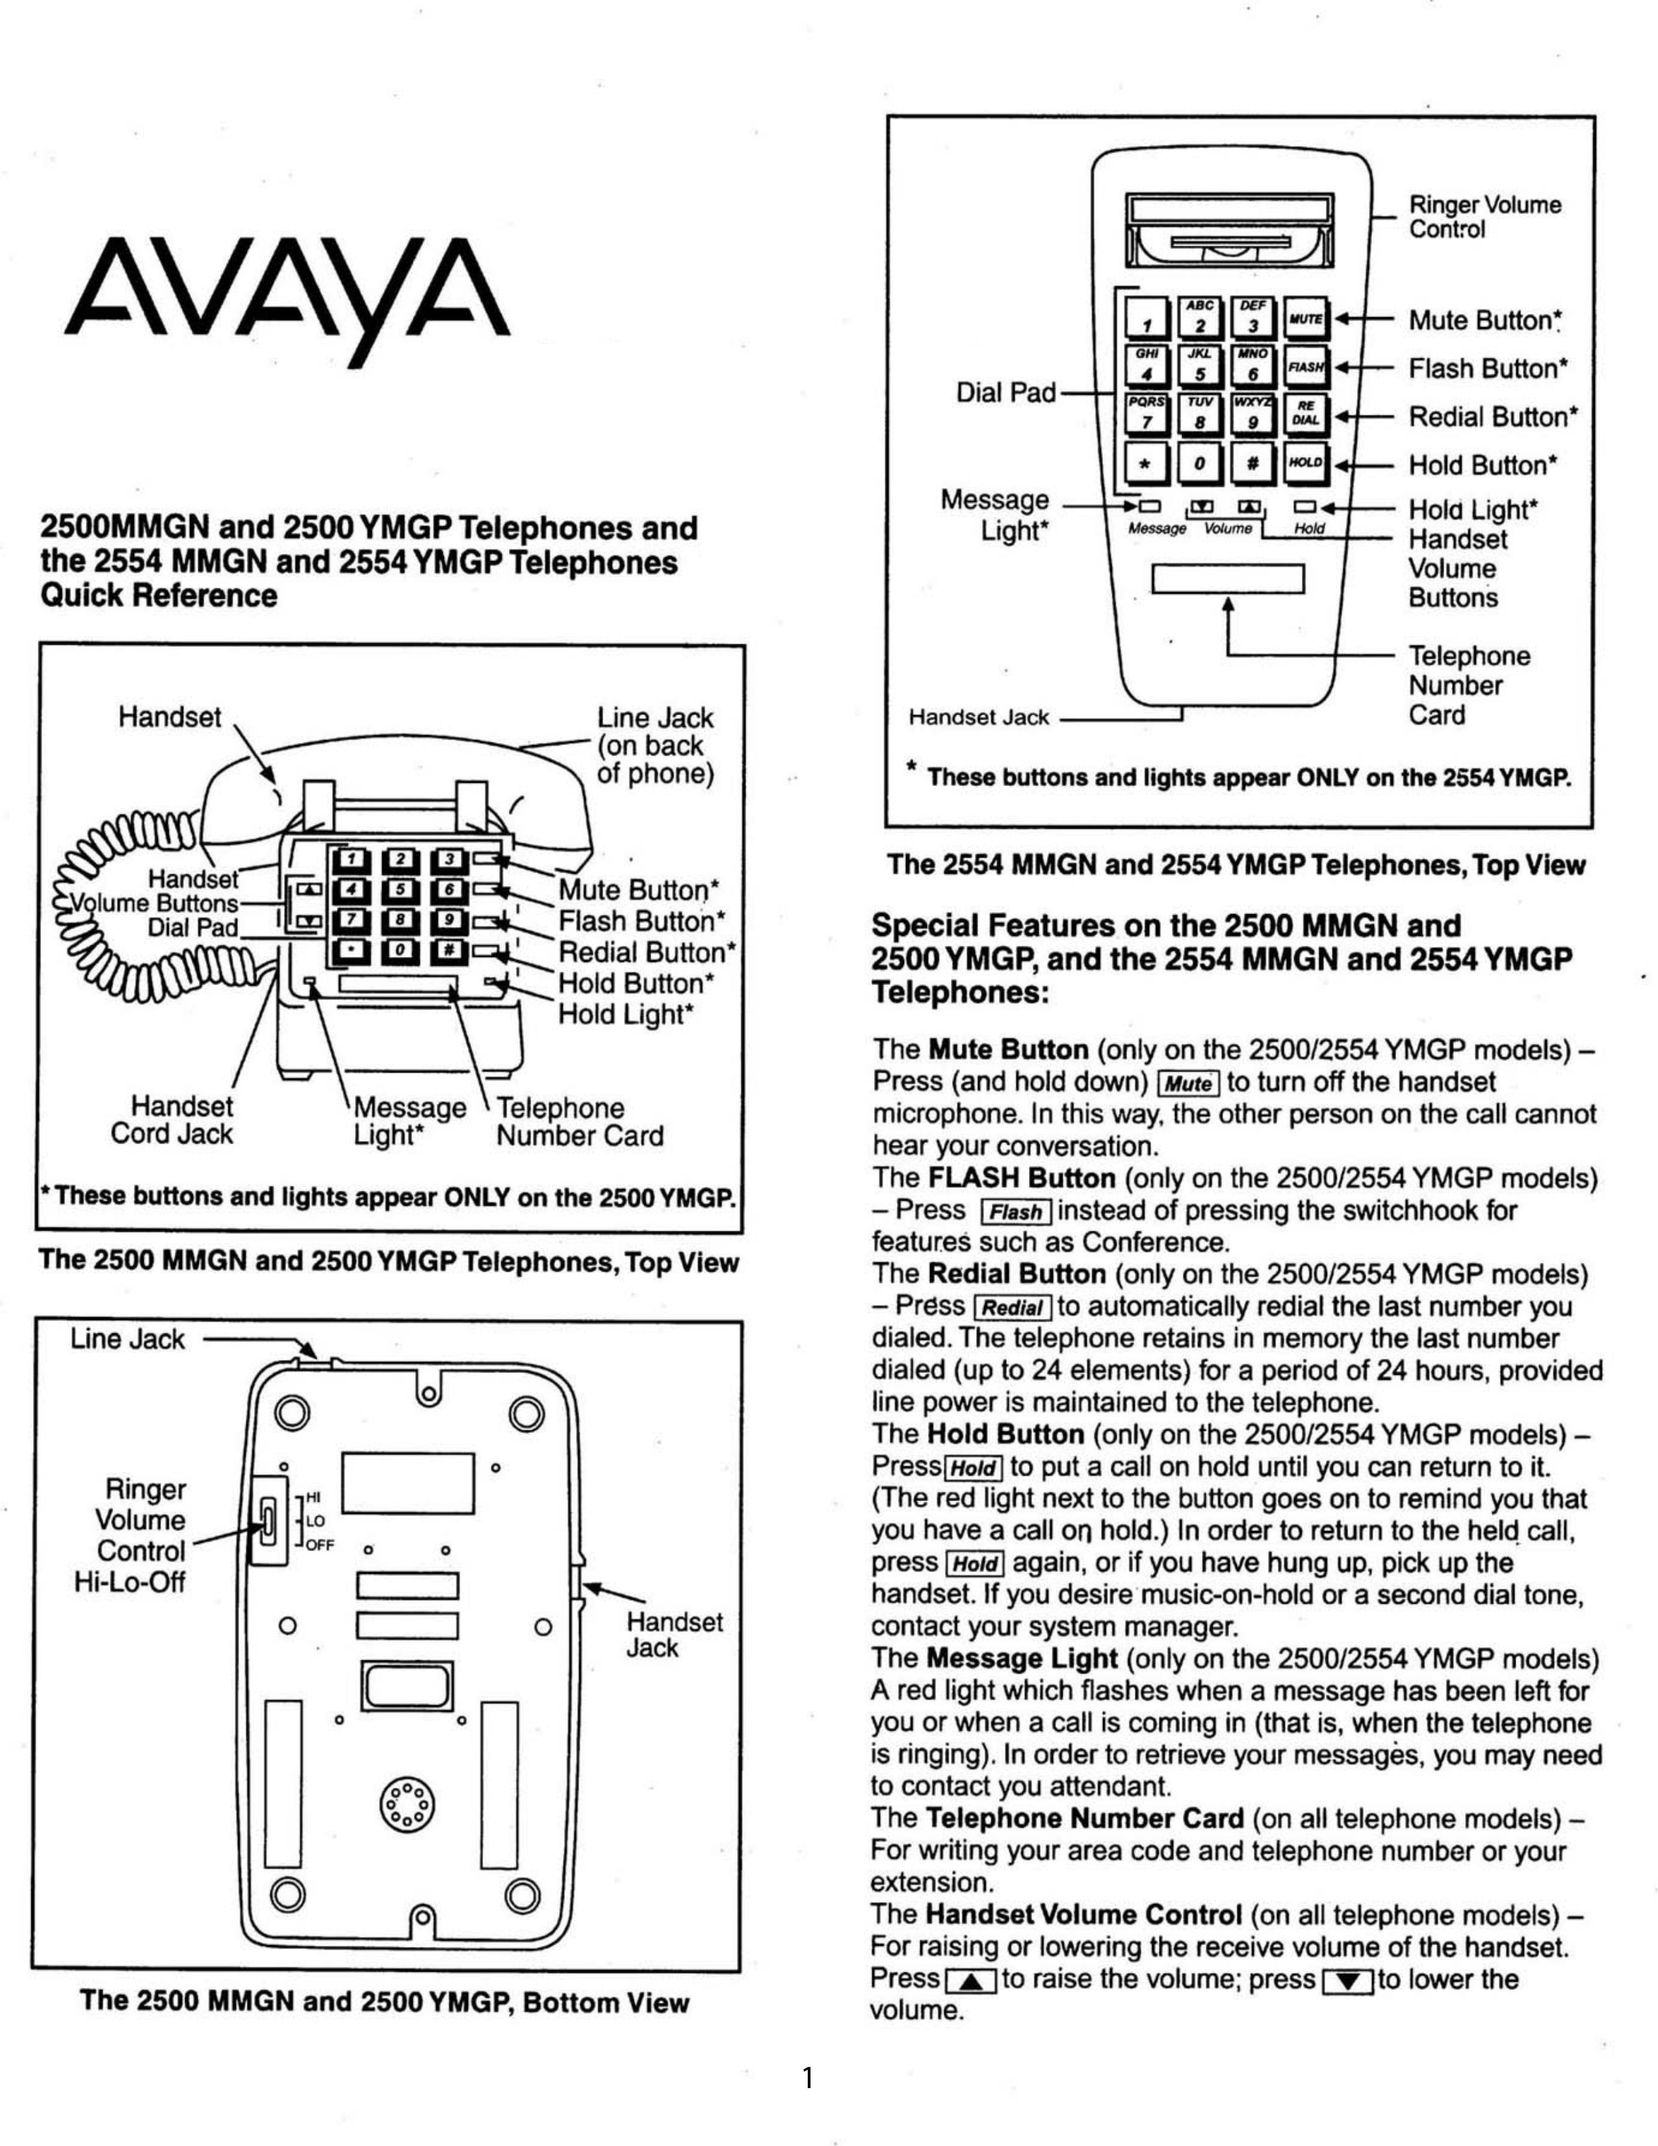 Avaya 2554 MMGN Cordless Telephone User Manual